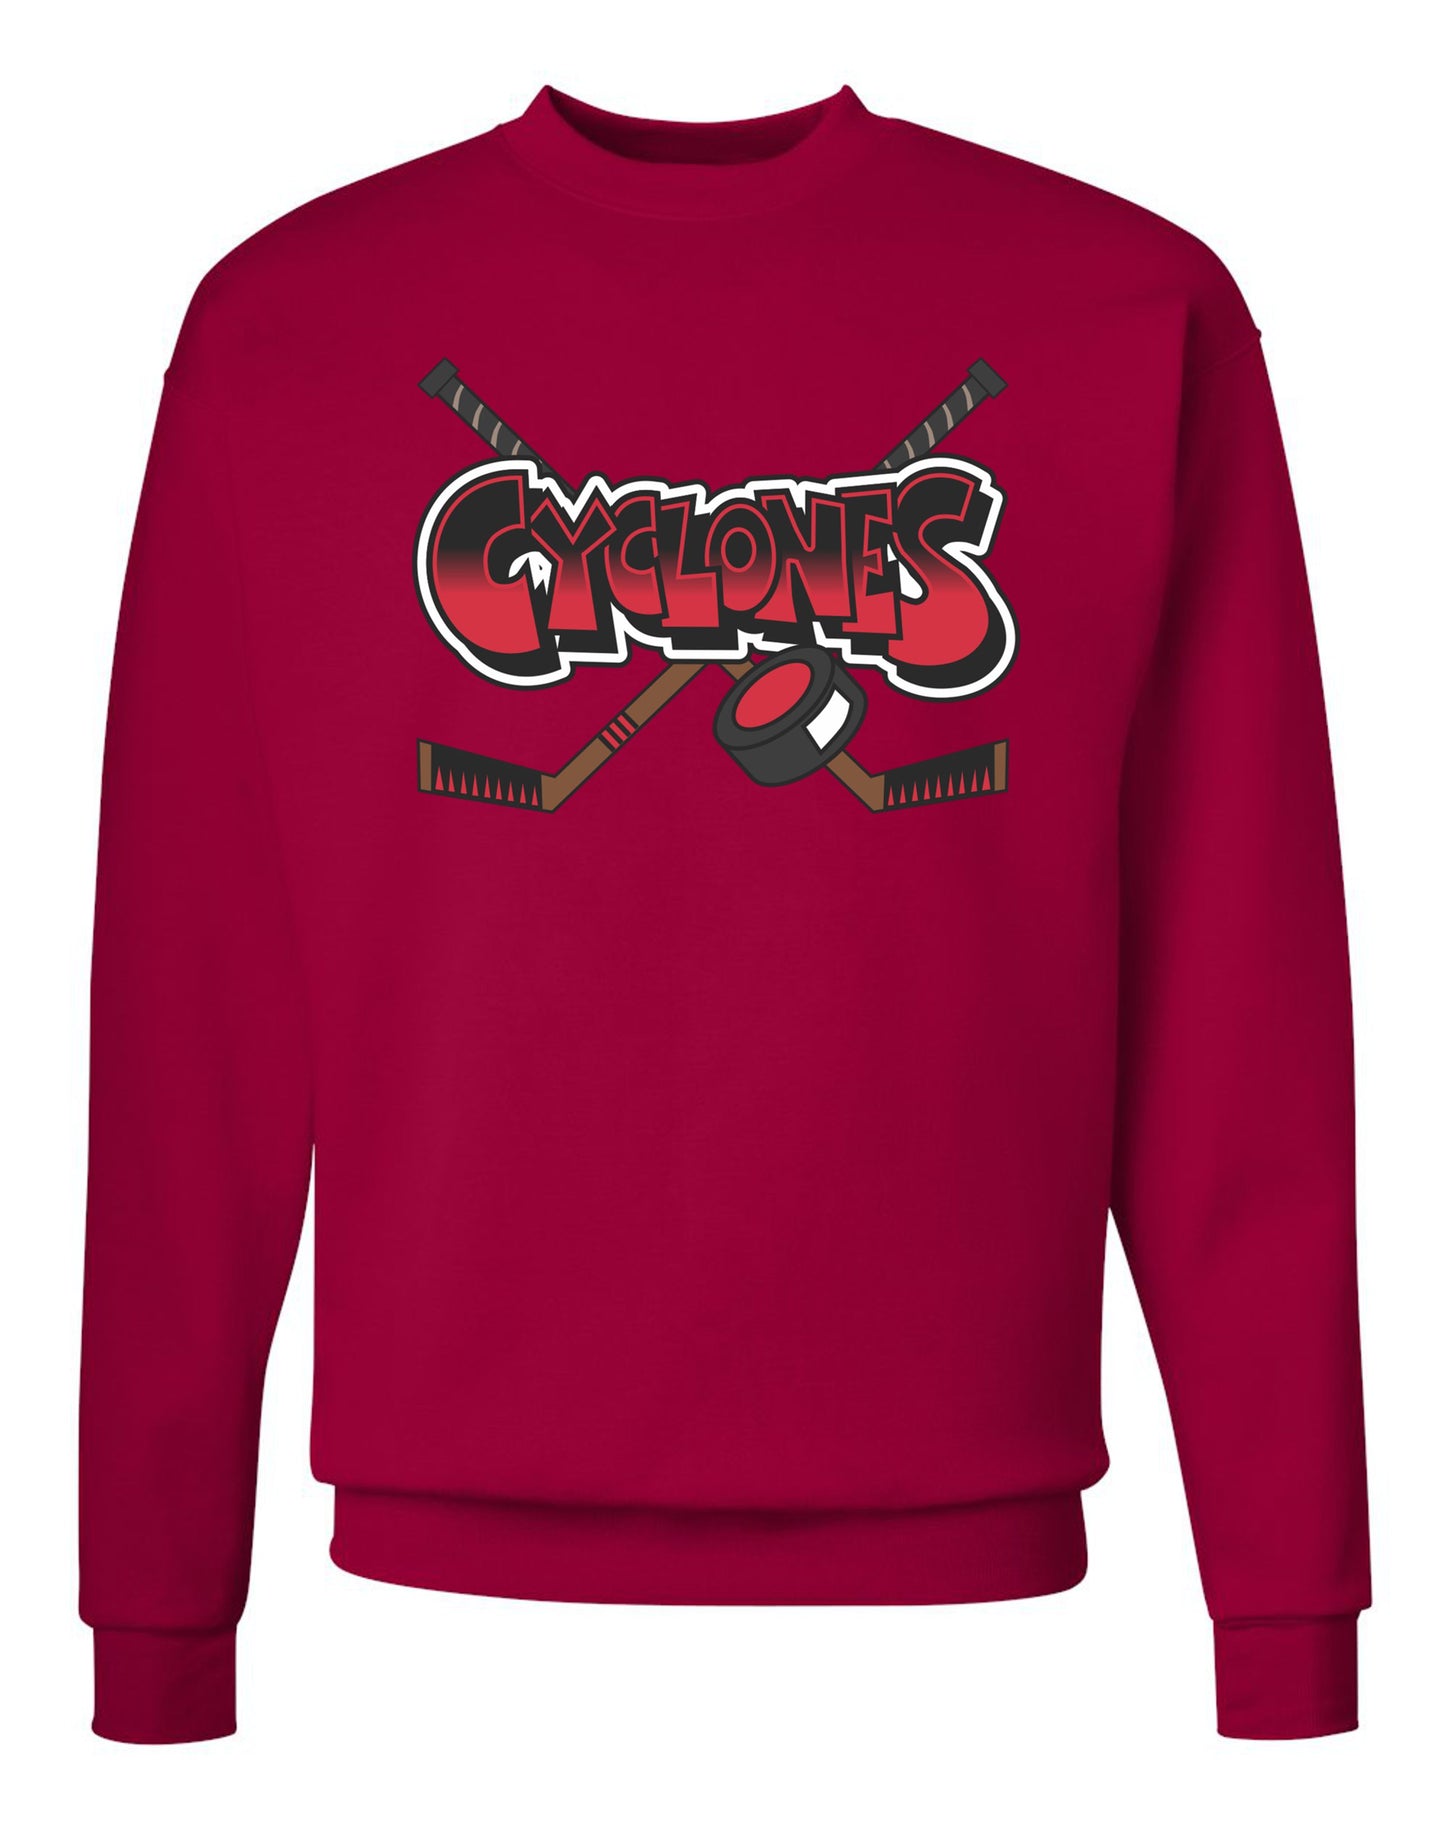 Cyclones Adult Crewneck Sweatshirt